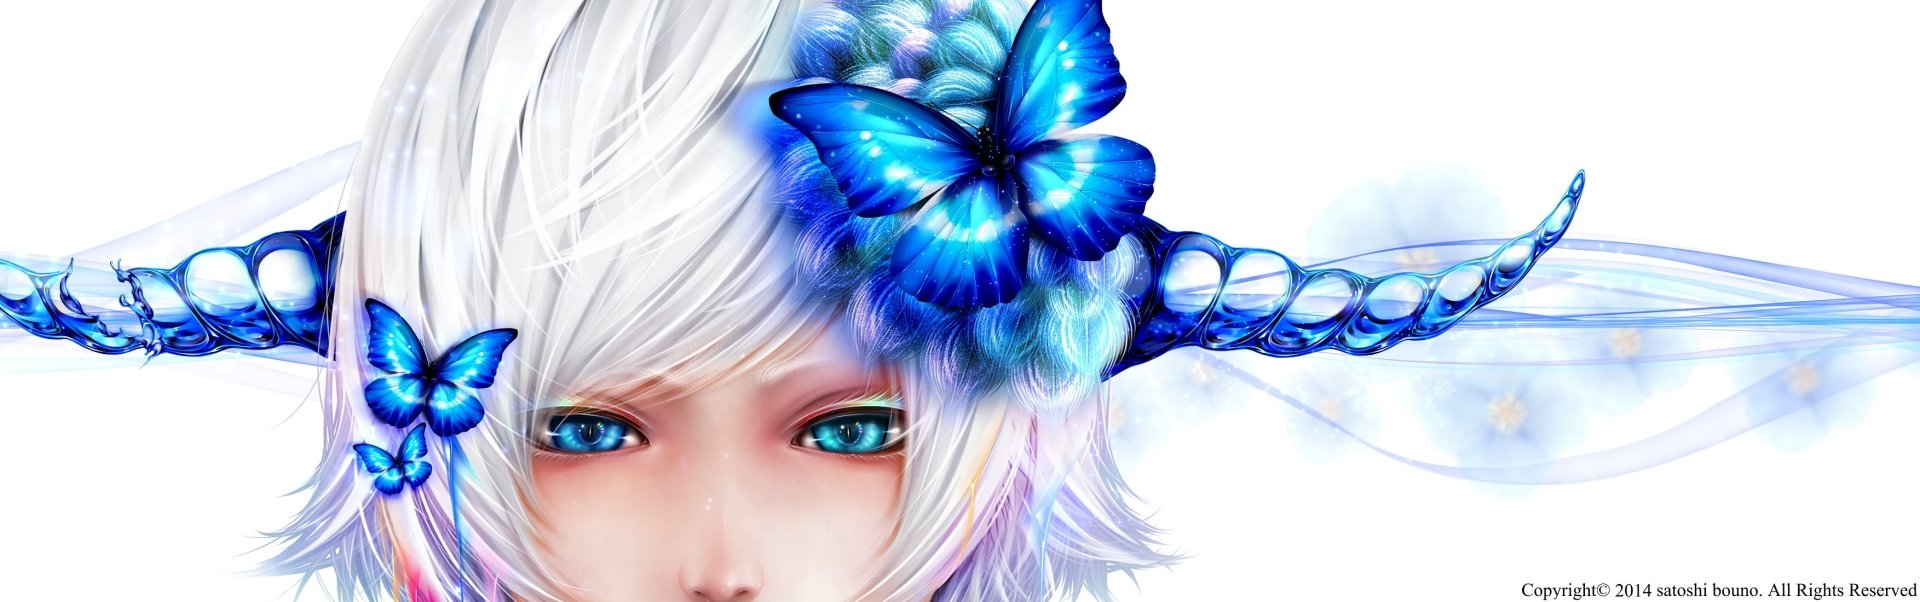 Butterfly Fantasy Girl by Bouno Satoshi